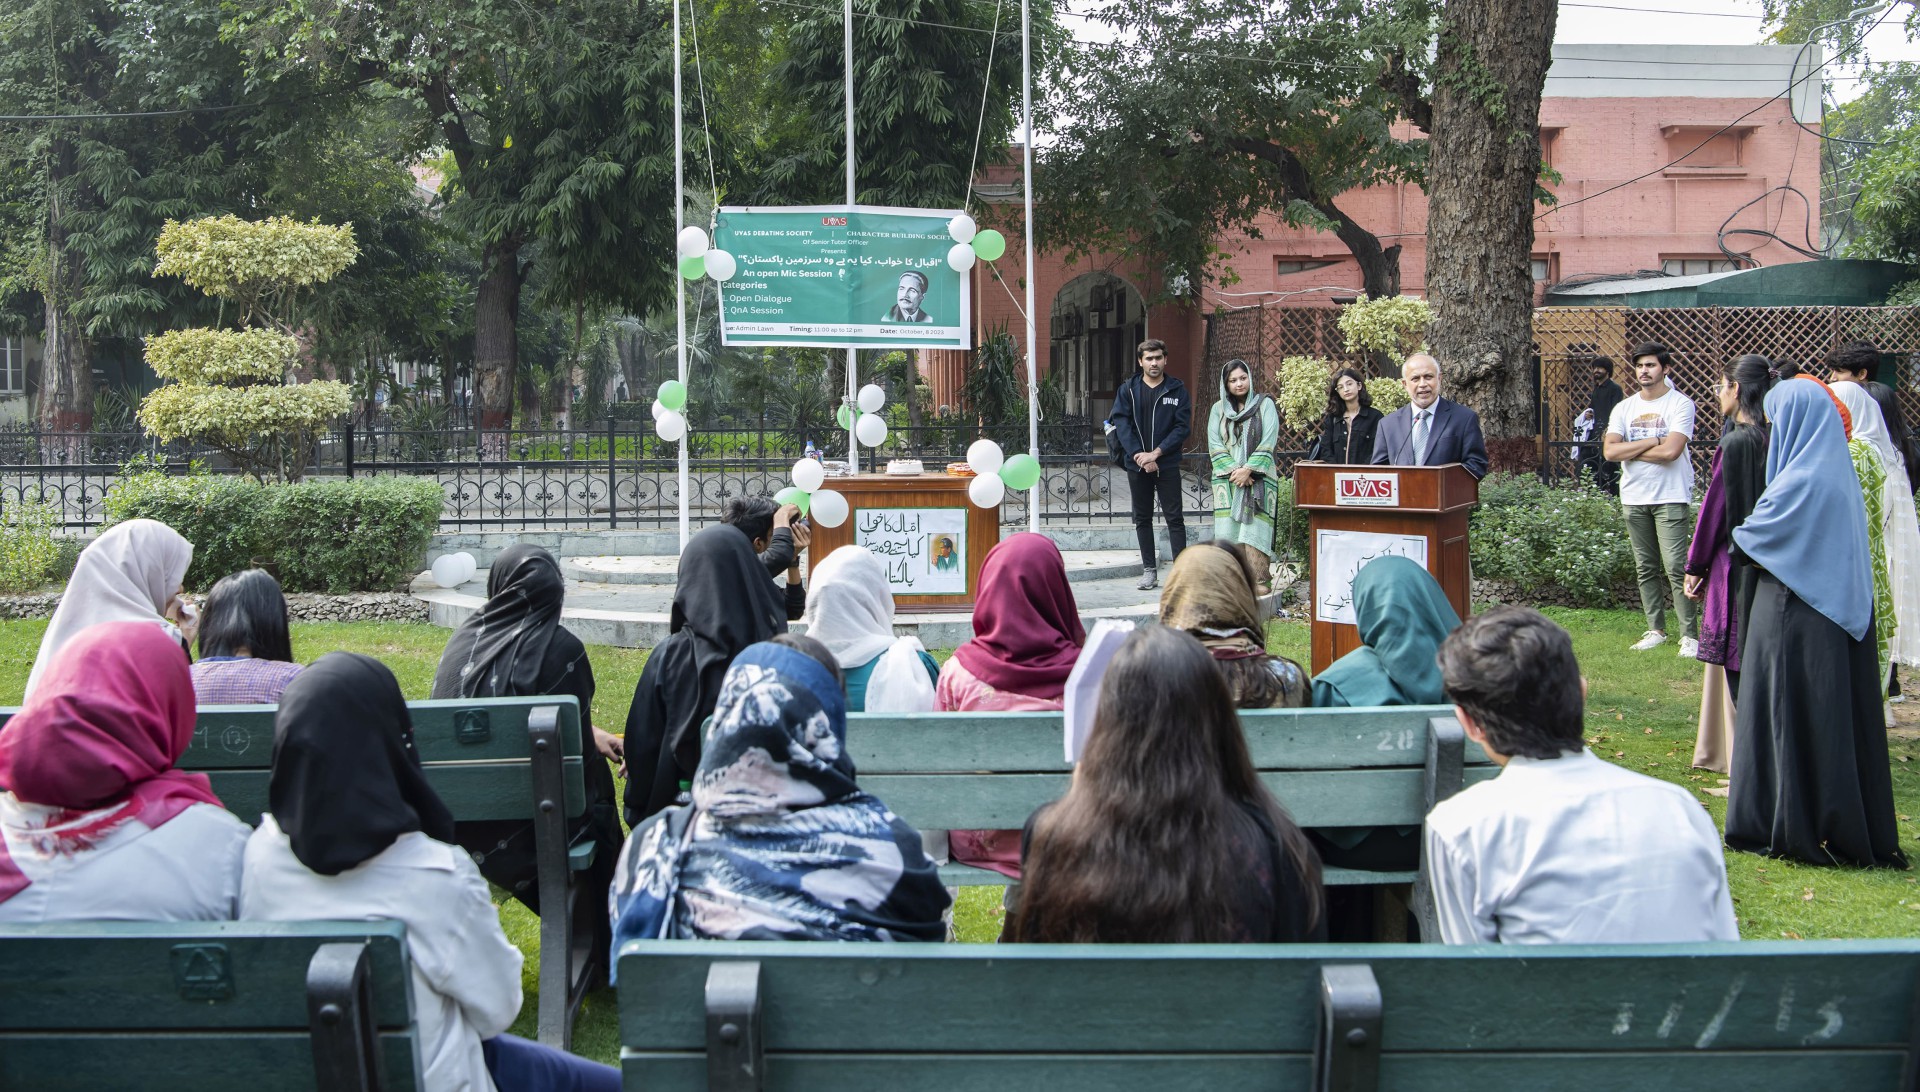 UVAS organizes an open mike session to mark Iqbal Day